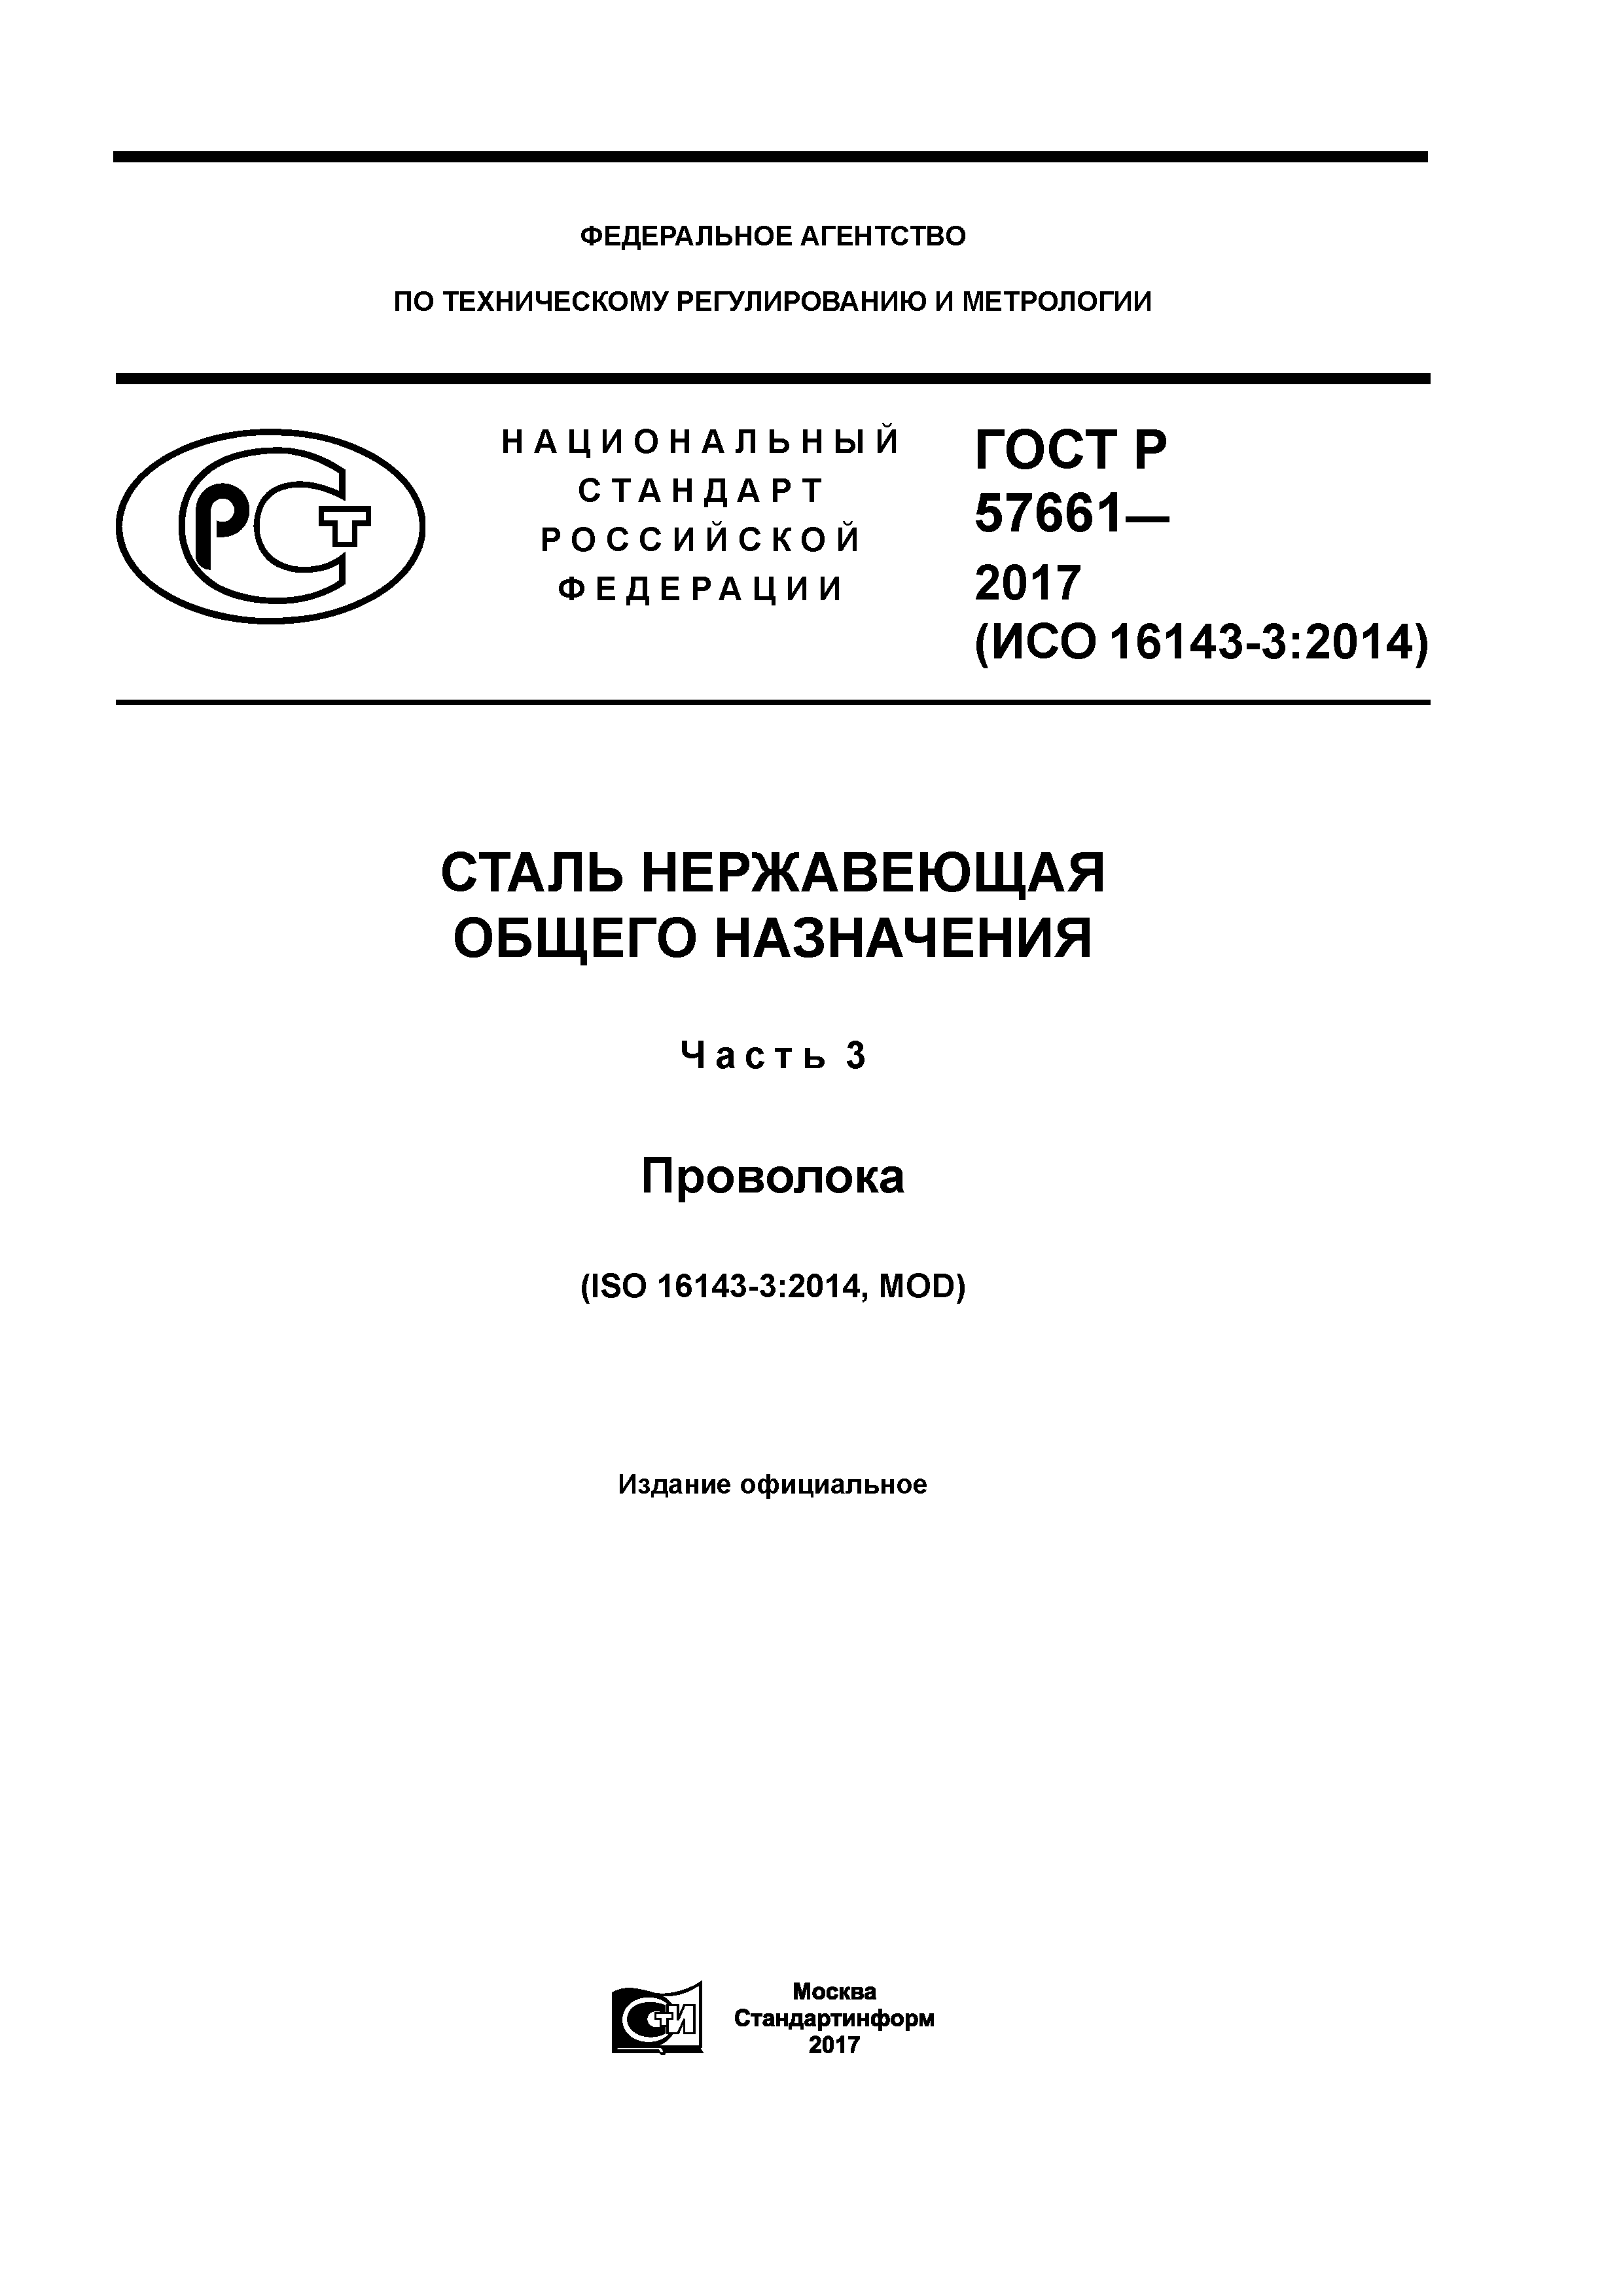 ГОСТ Р 57661-2017